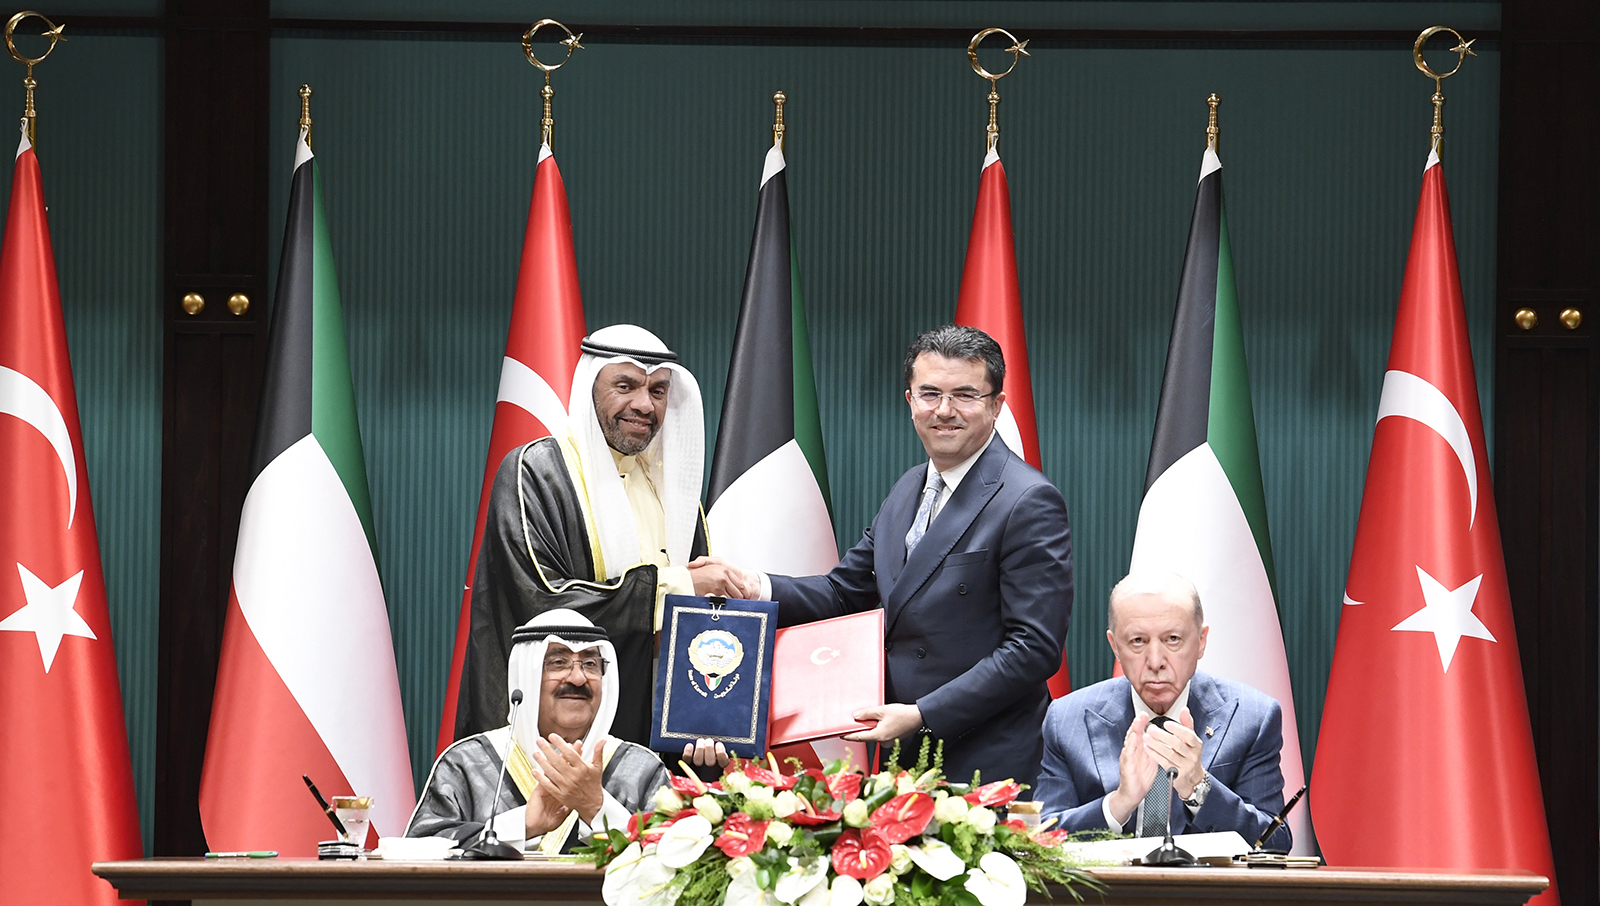 Kuwait’s Emir Sheikh Meshal Al-Ahmed Al-Jaber Al-Sabah and Turkish President Recep Tayyip Erdogan witness the signing of several deals in Ankara. (KUNA)